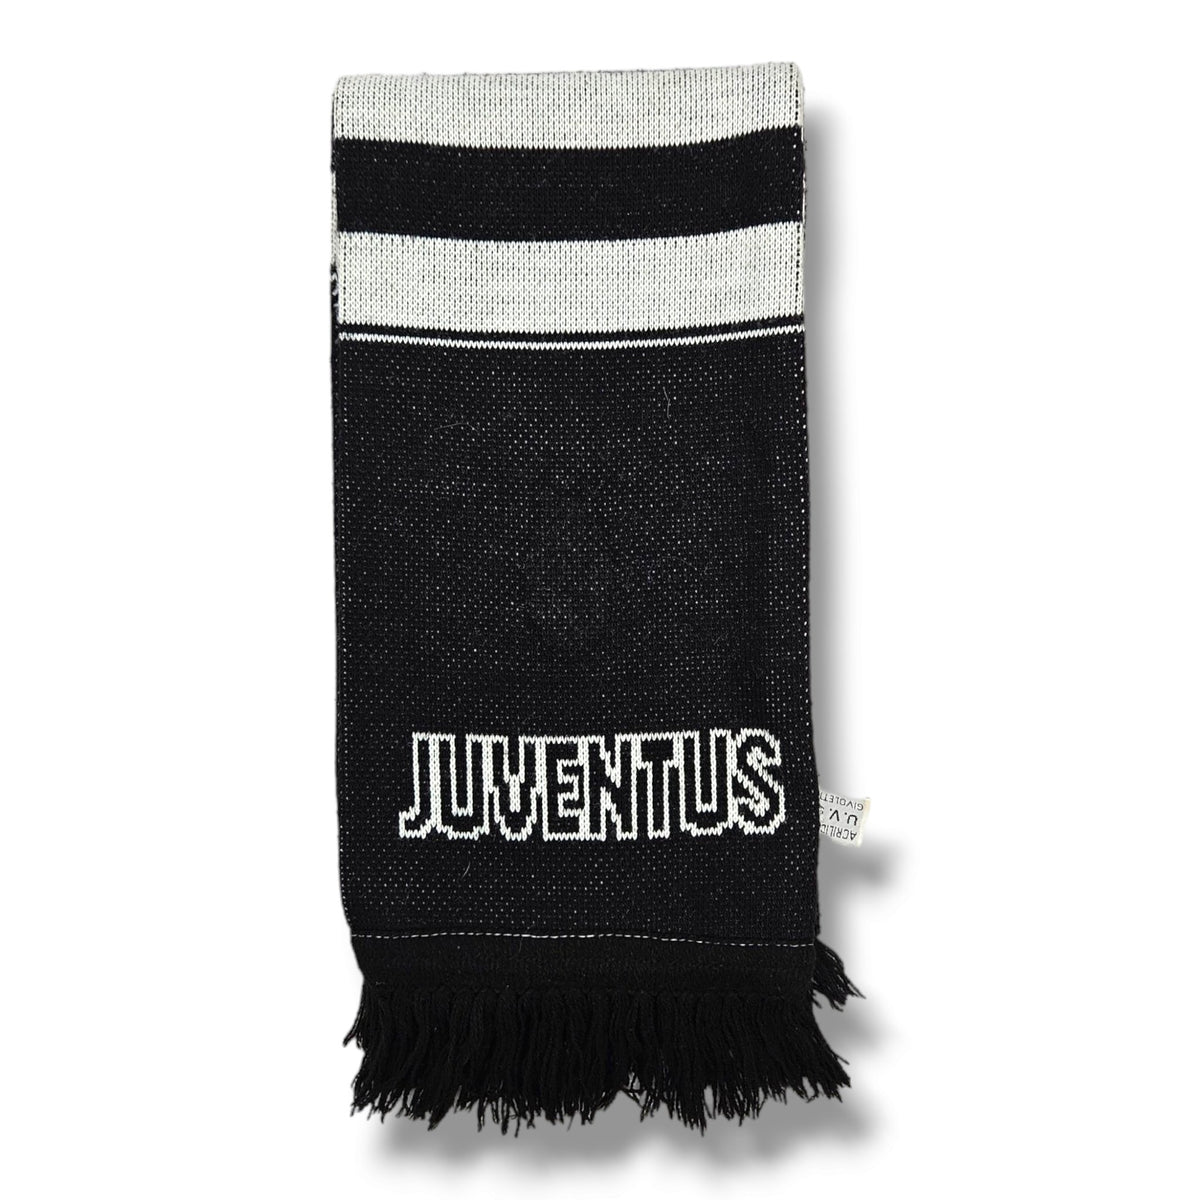 Juventus Vintage Football Scarf - Football Finery - FF203812